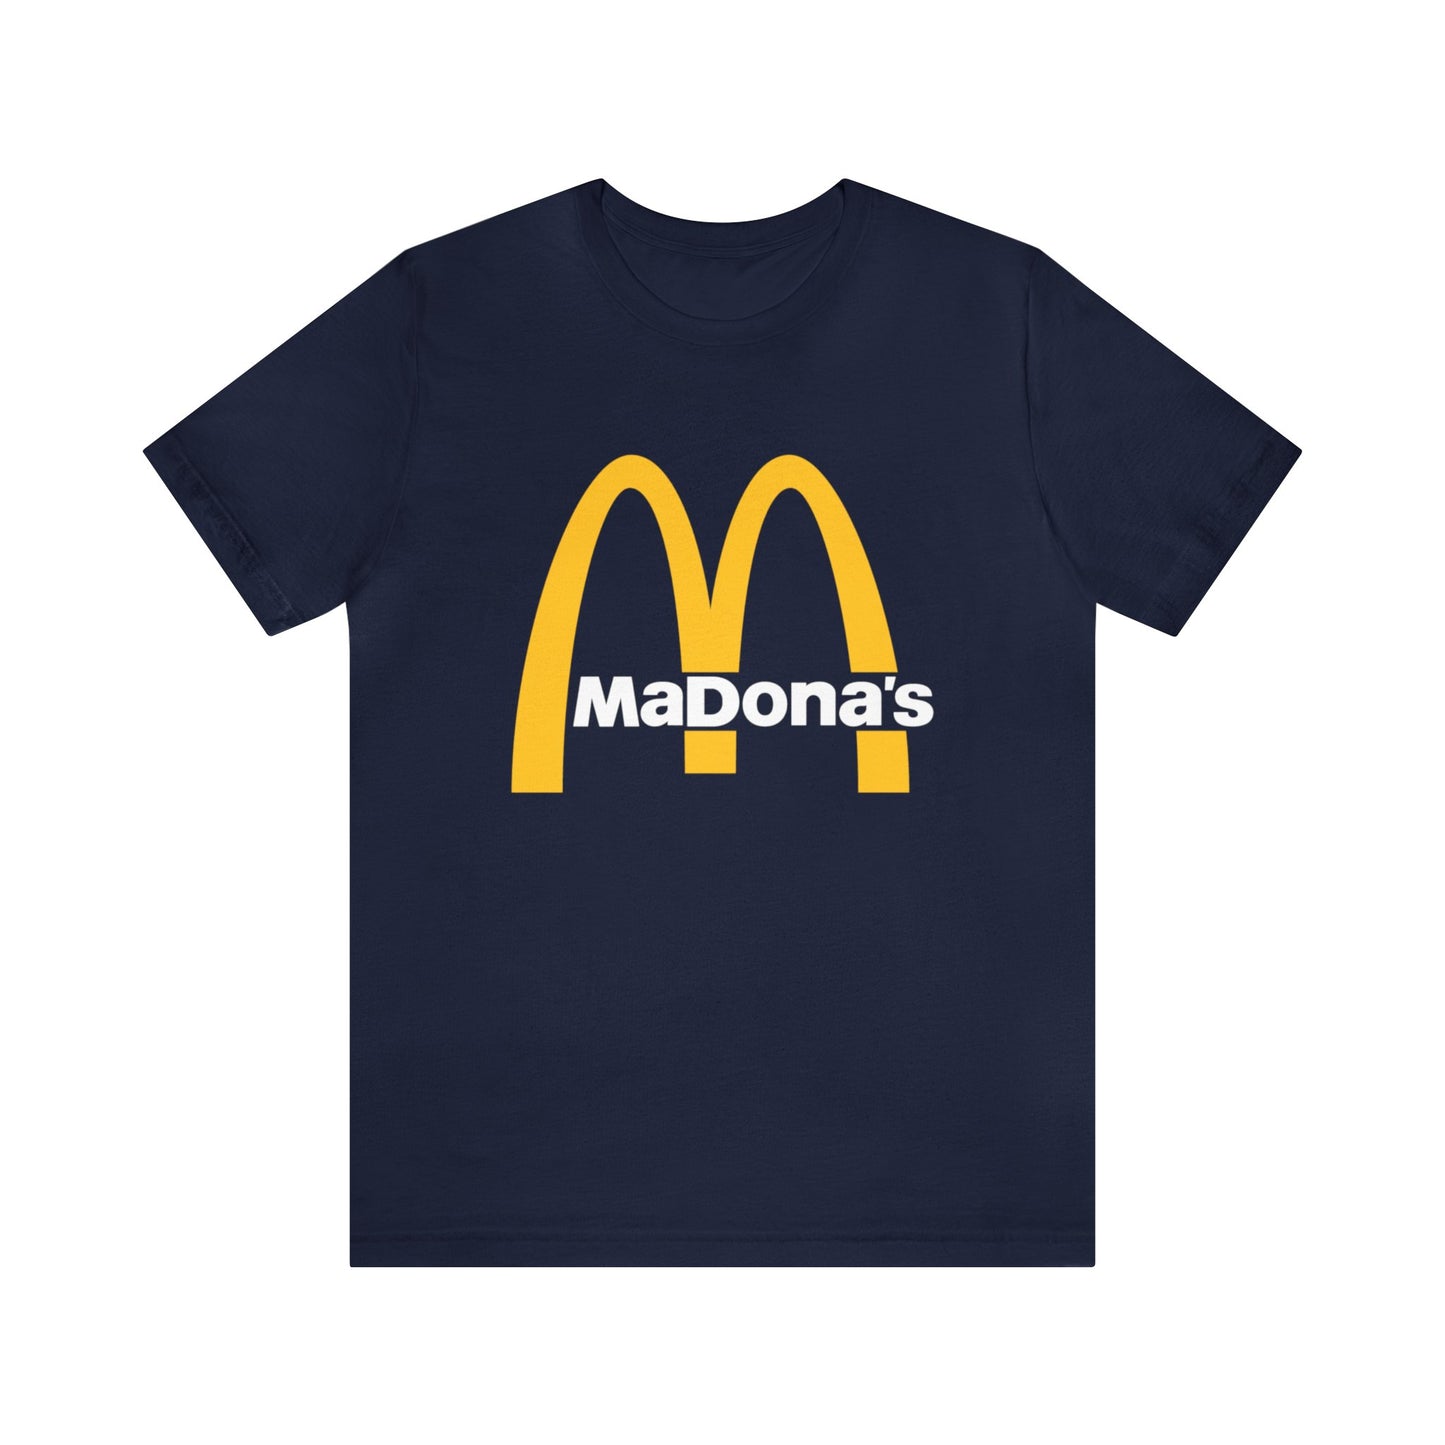 Madona's T-Shirt - Hispanic McDonald's Logo Parody